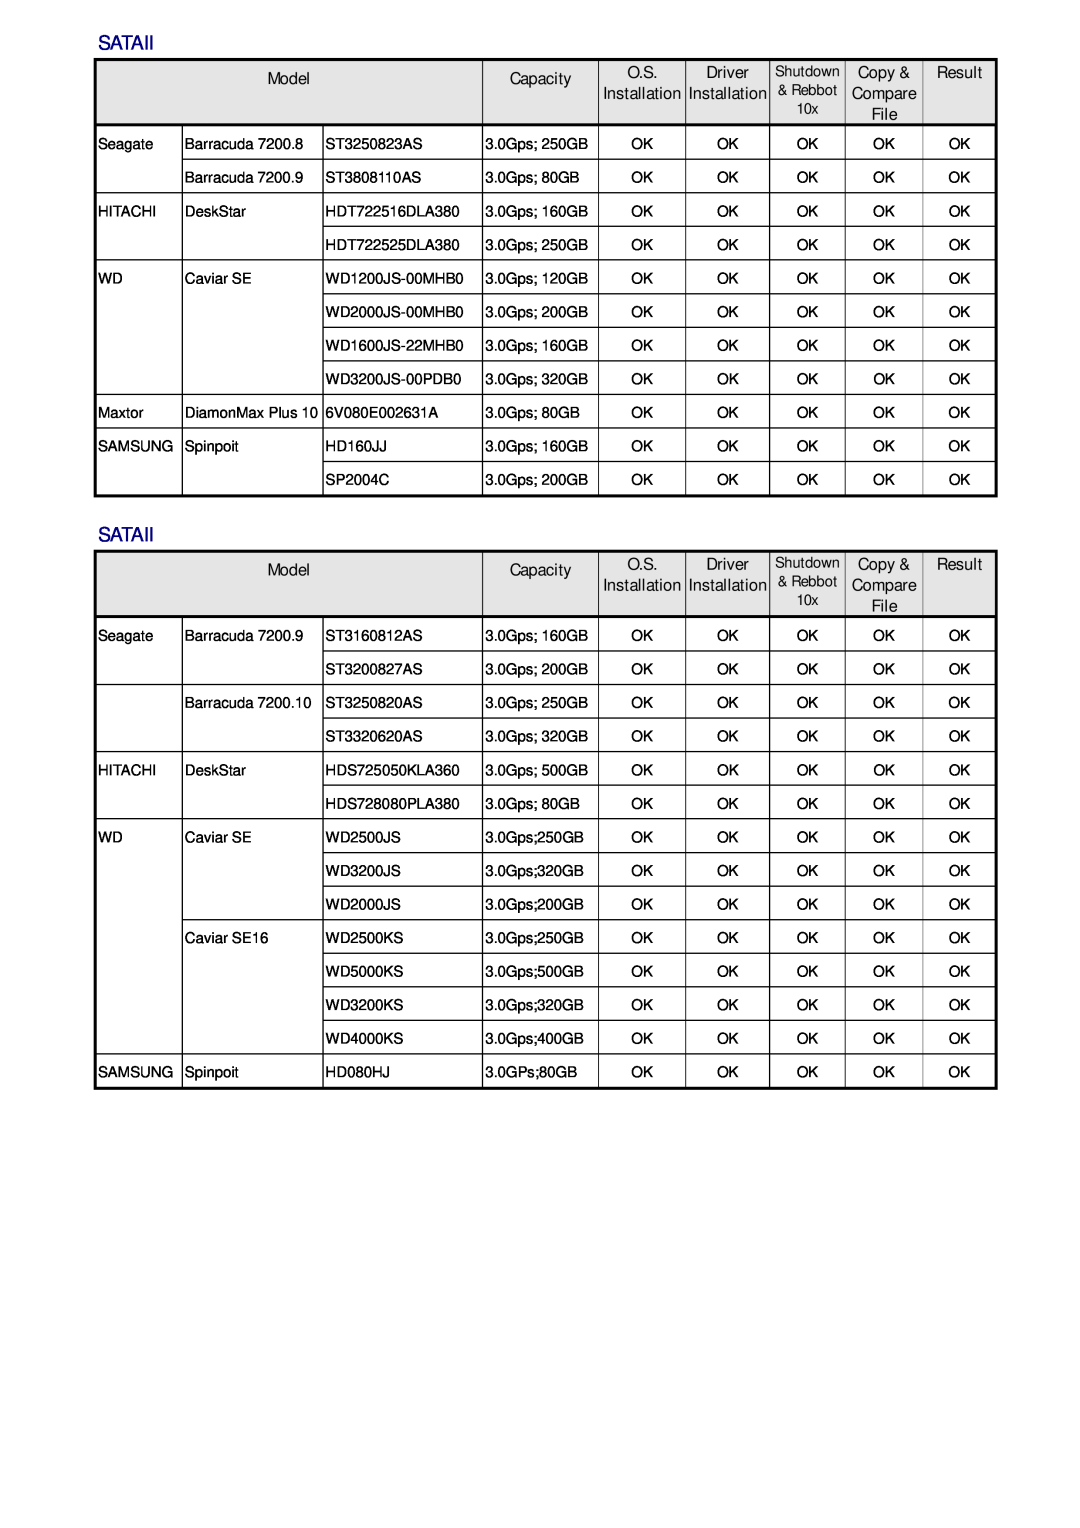 Samsung HD080HJ/P manual Sataii, Model, Capacity, Driver, Result, Compare, File 